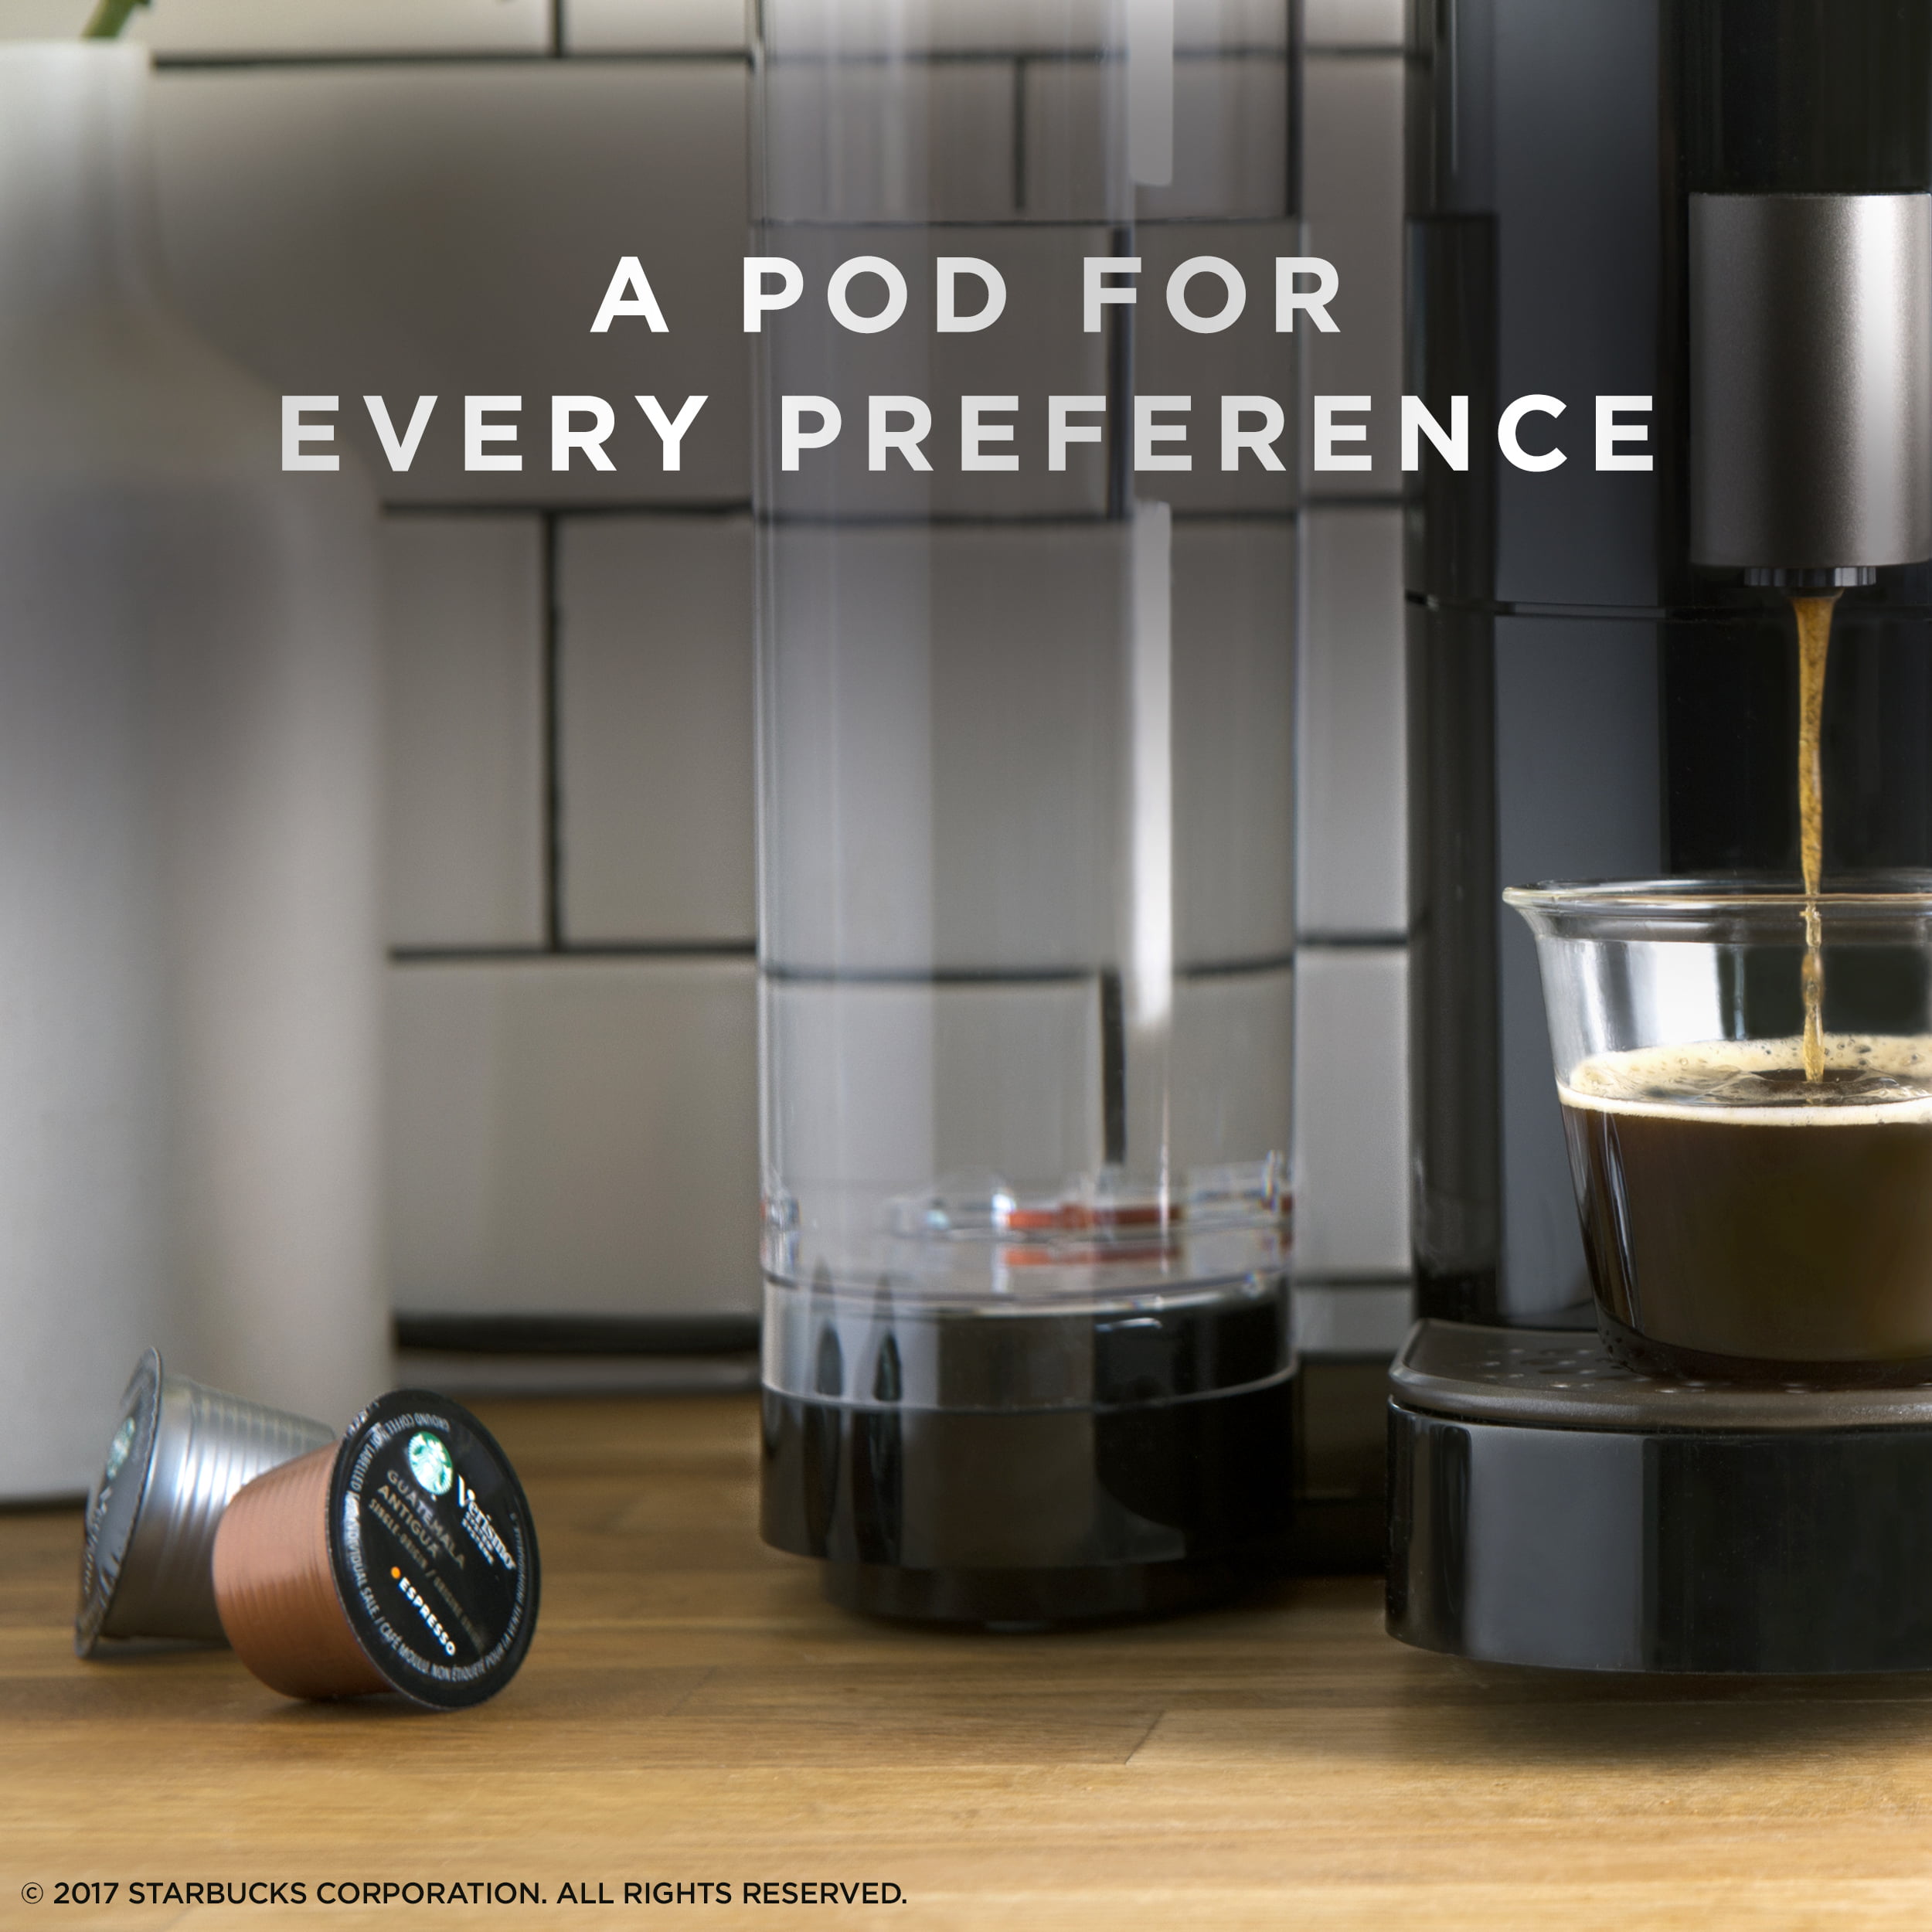 Starbucks Verismo System, Coffee and Espresso Single Serve Brewer, Black